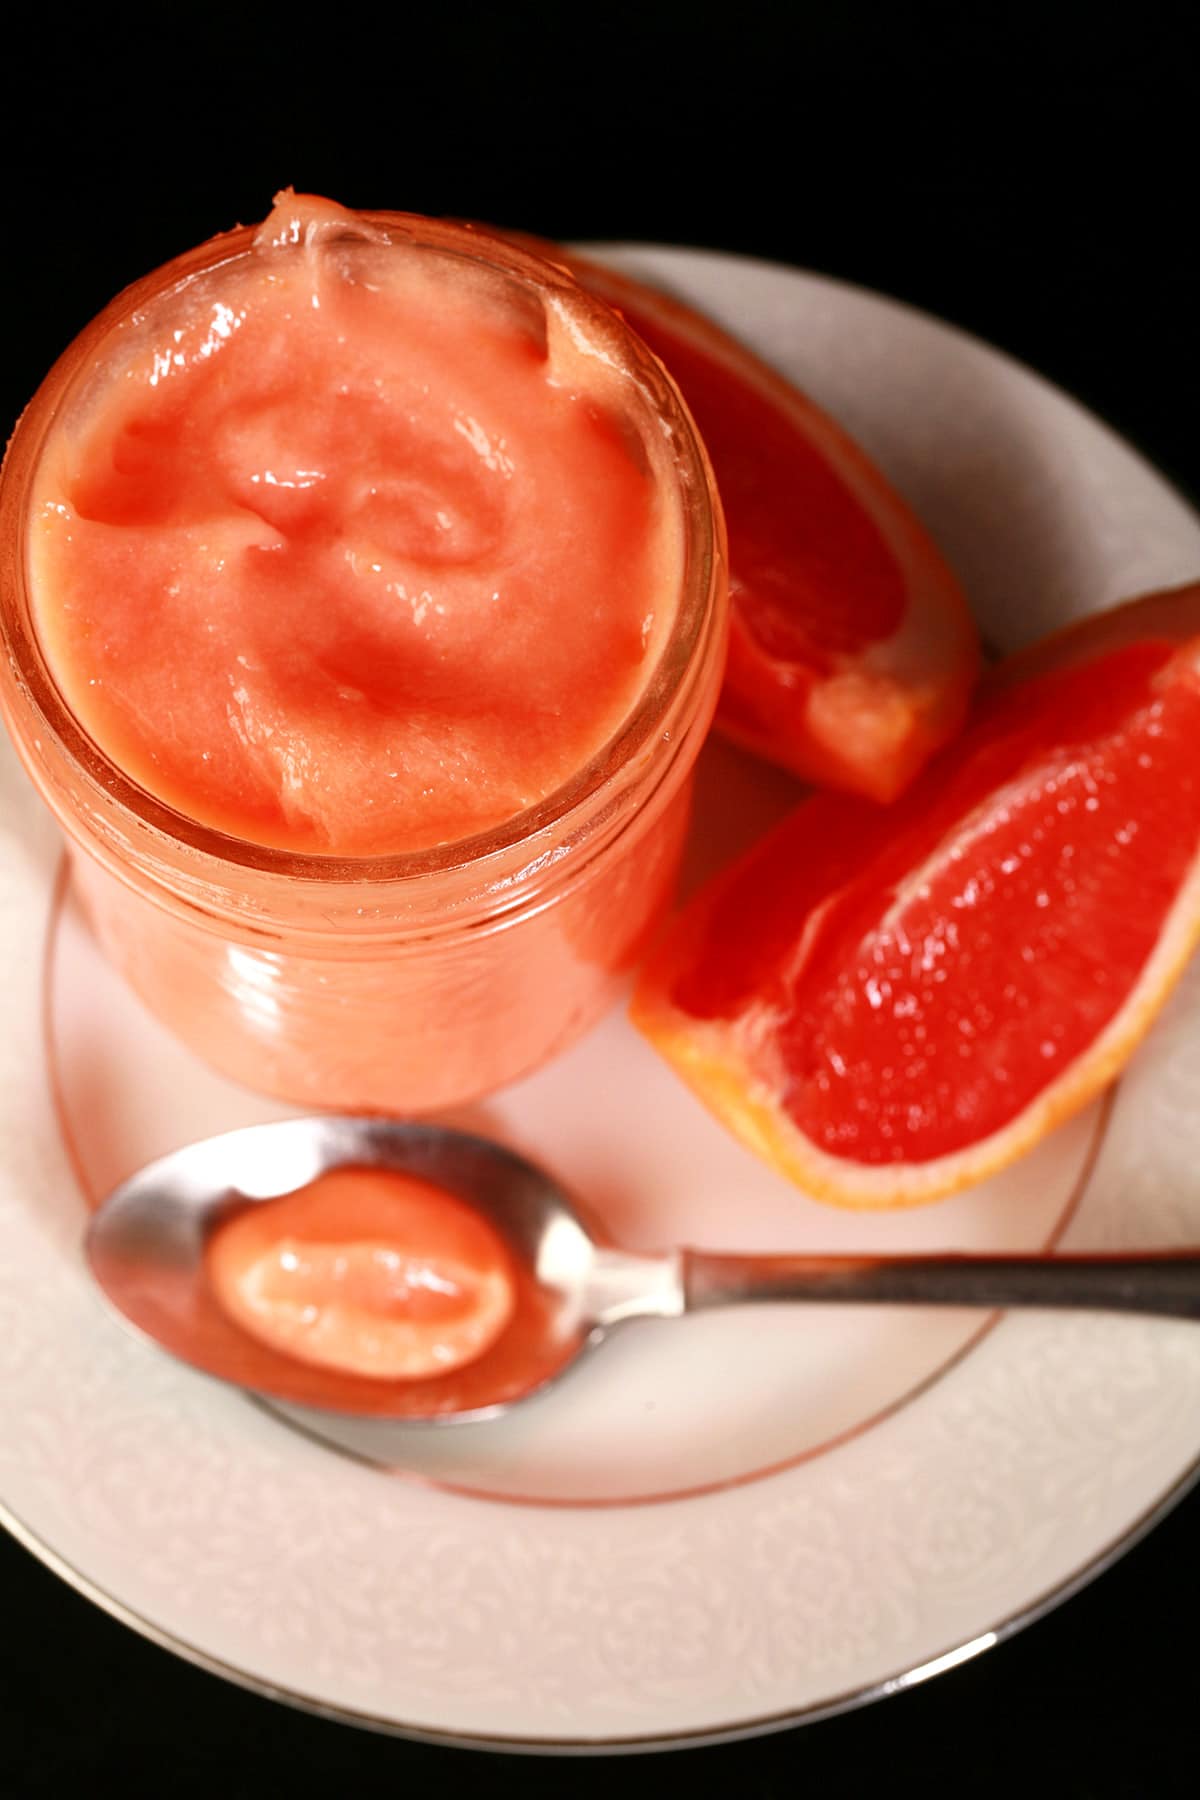 A jar of pink grapefruit curd on a plate, next to slices of pink grapefruit and a spoon of curd.